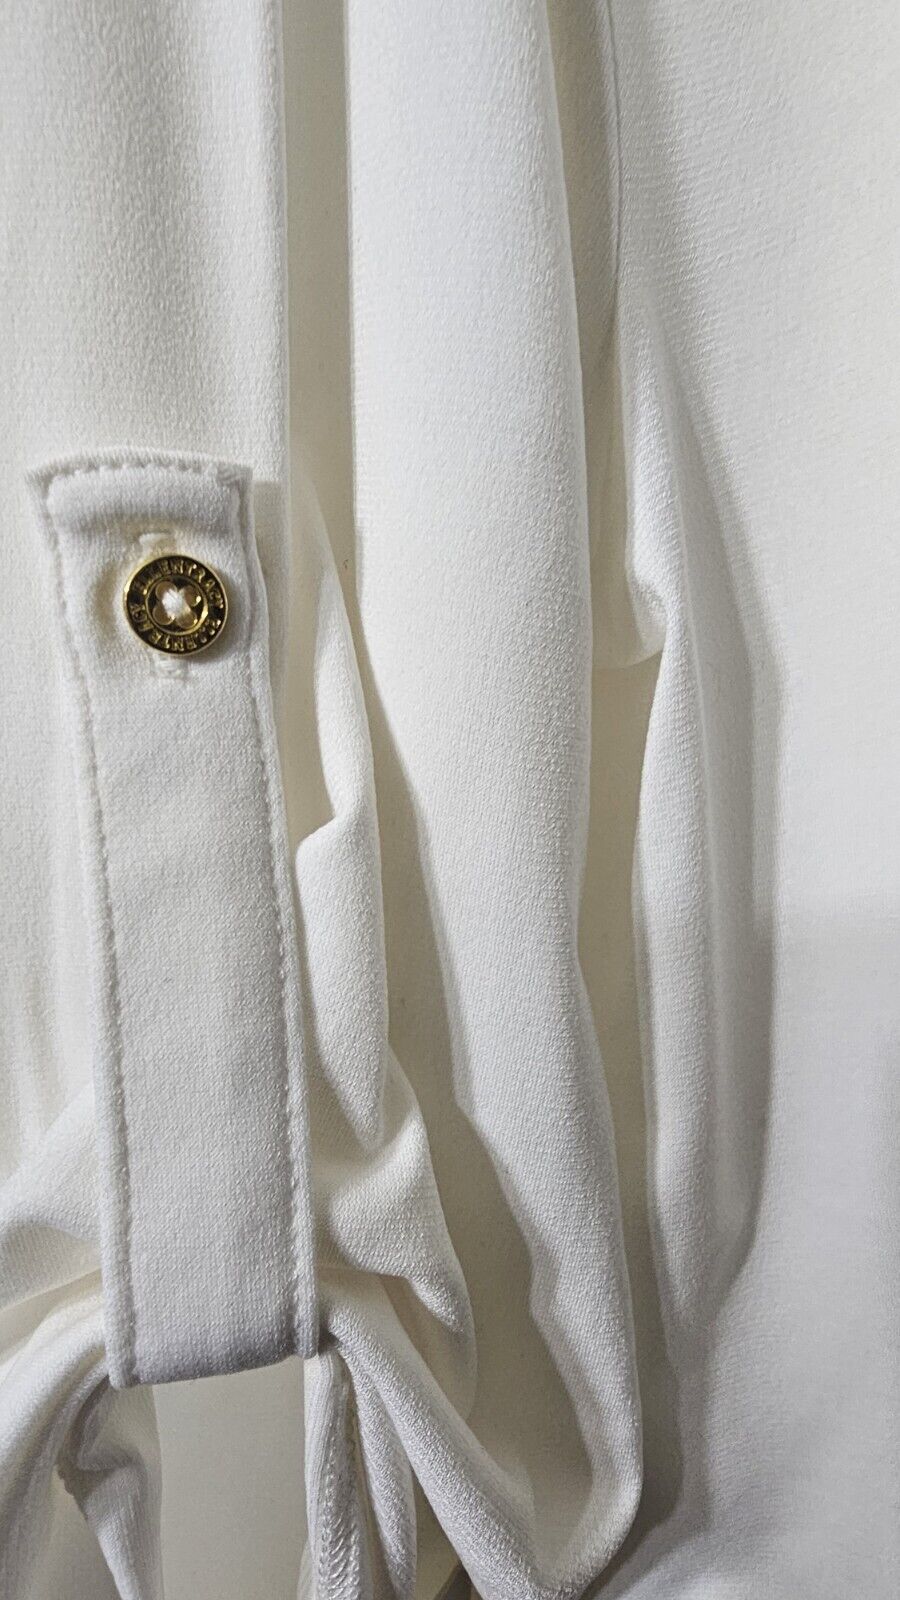 Ellen Tracy Women's Cream Roll Tab Button Up Shirt Top Lg-NEW w/DEFECTS-PLS READ